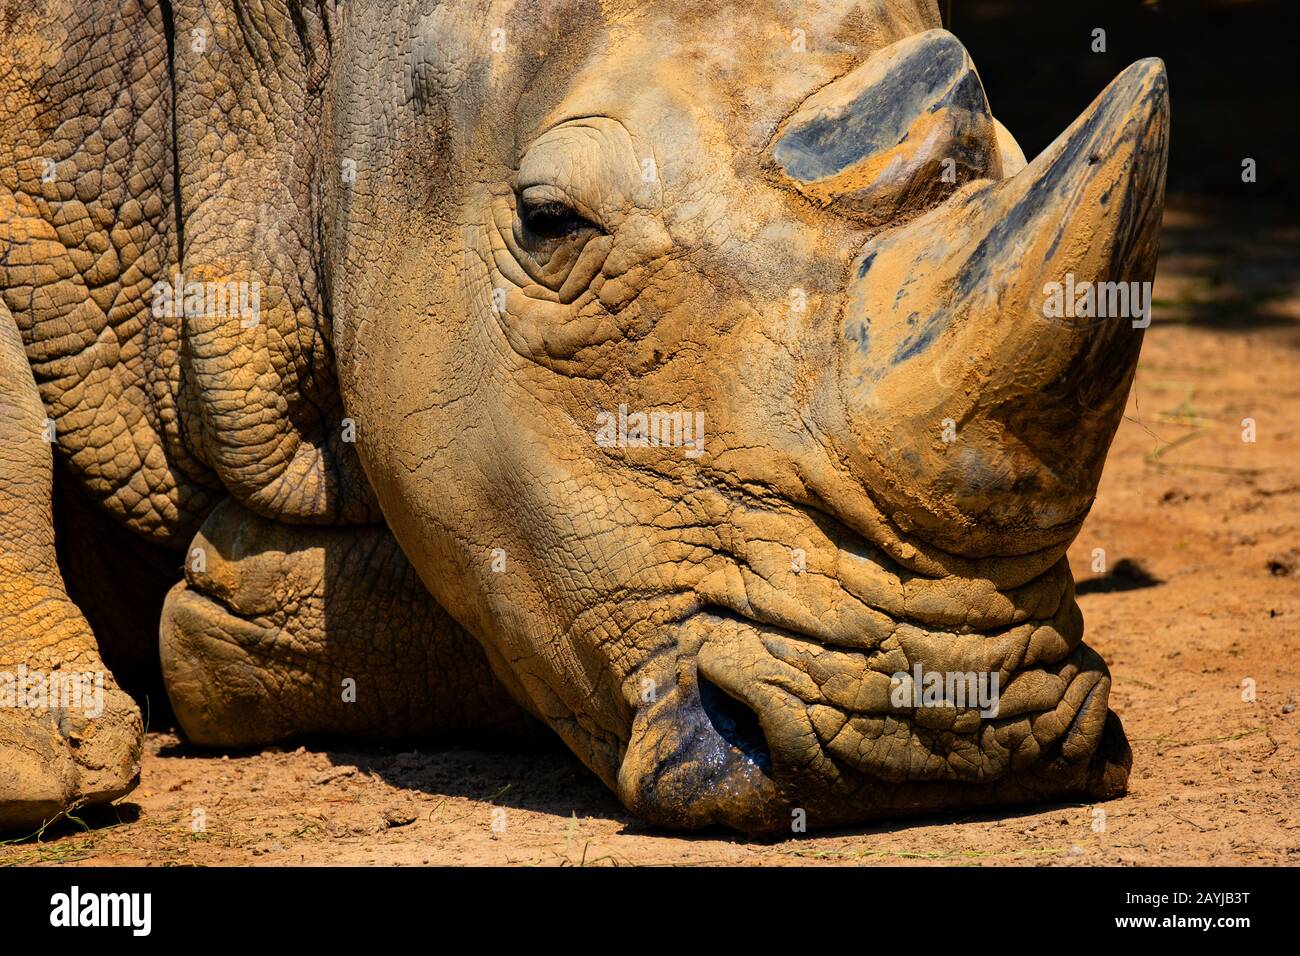 white rhinoceros, square-lipped rhinoceros, grass rhinoceros (Ceratotherium simum), dozing Stock Photo